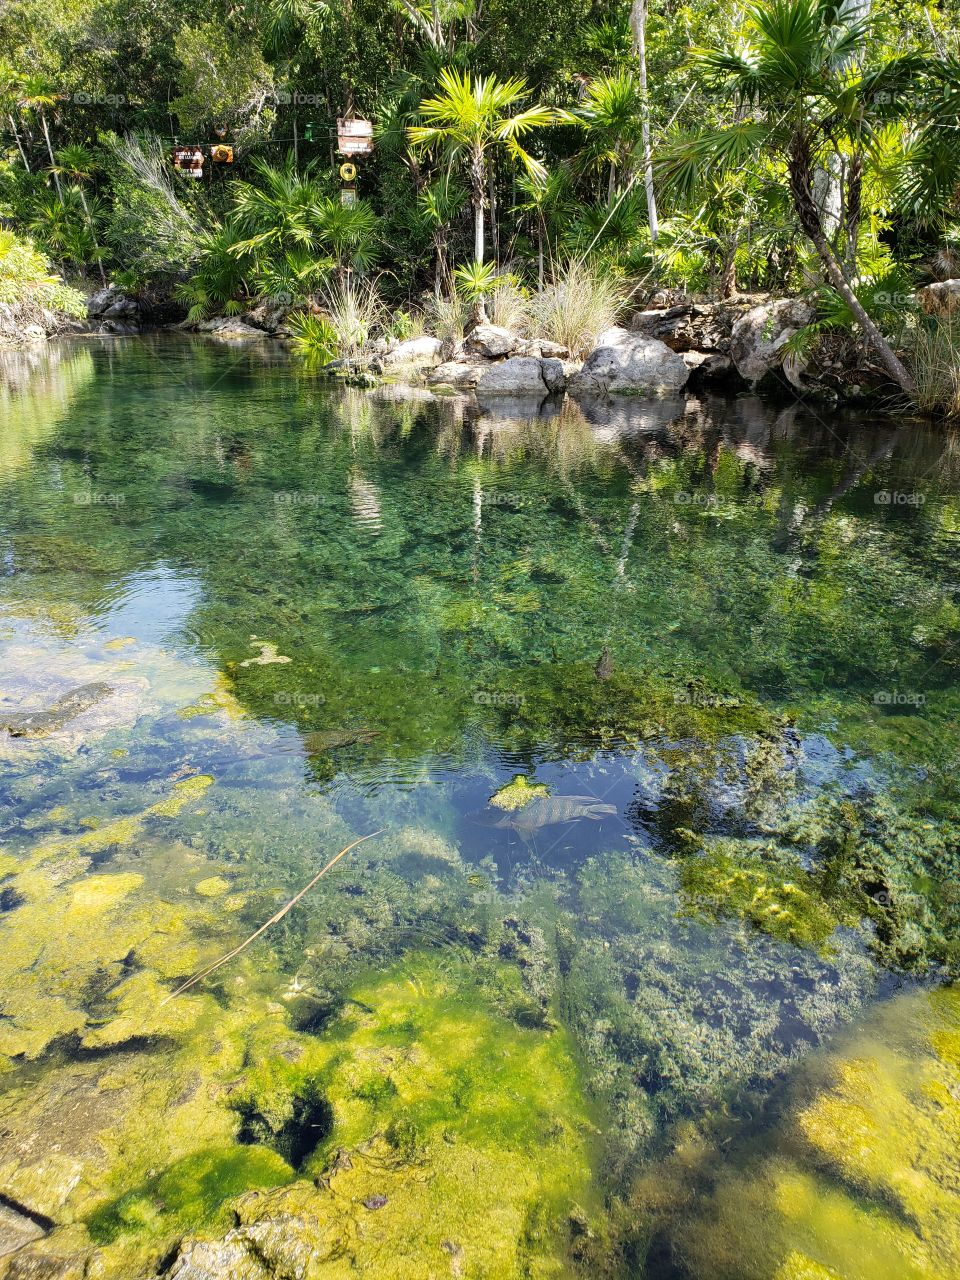 Cenote paraiso in Mexico